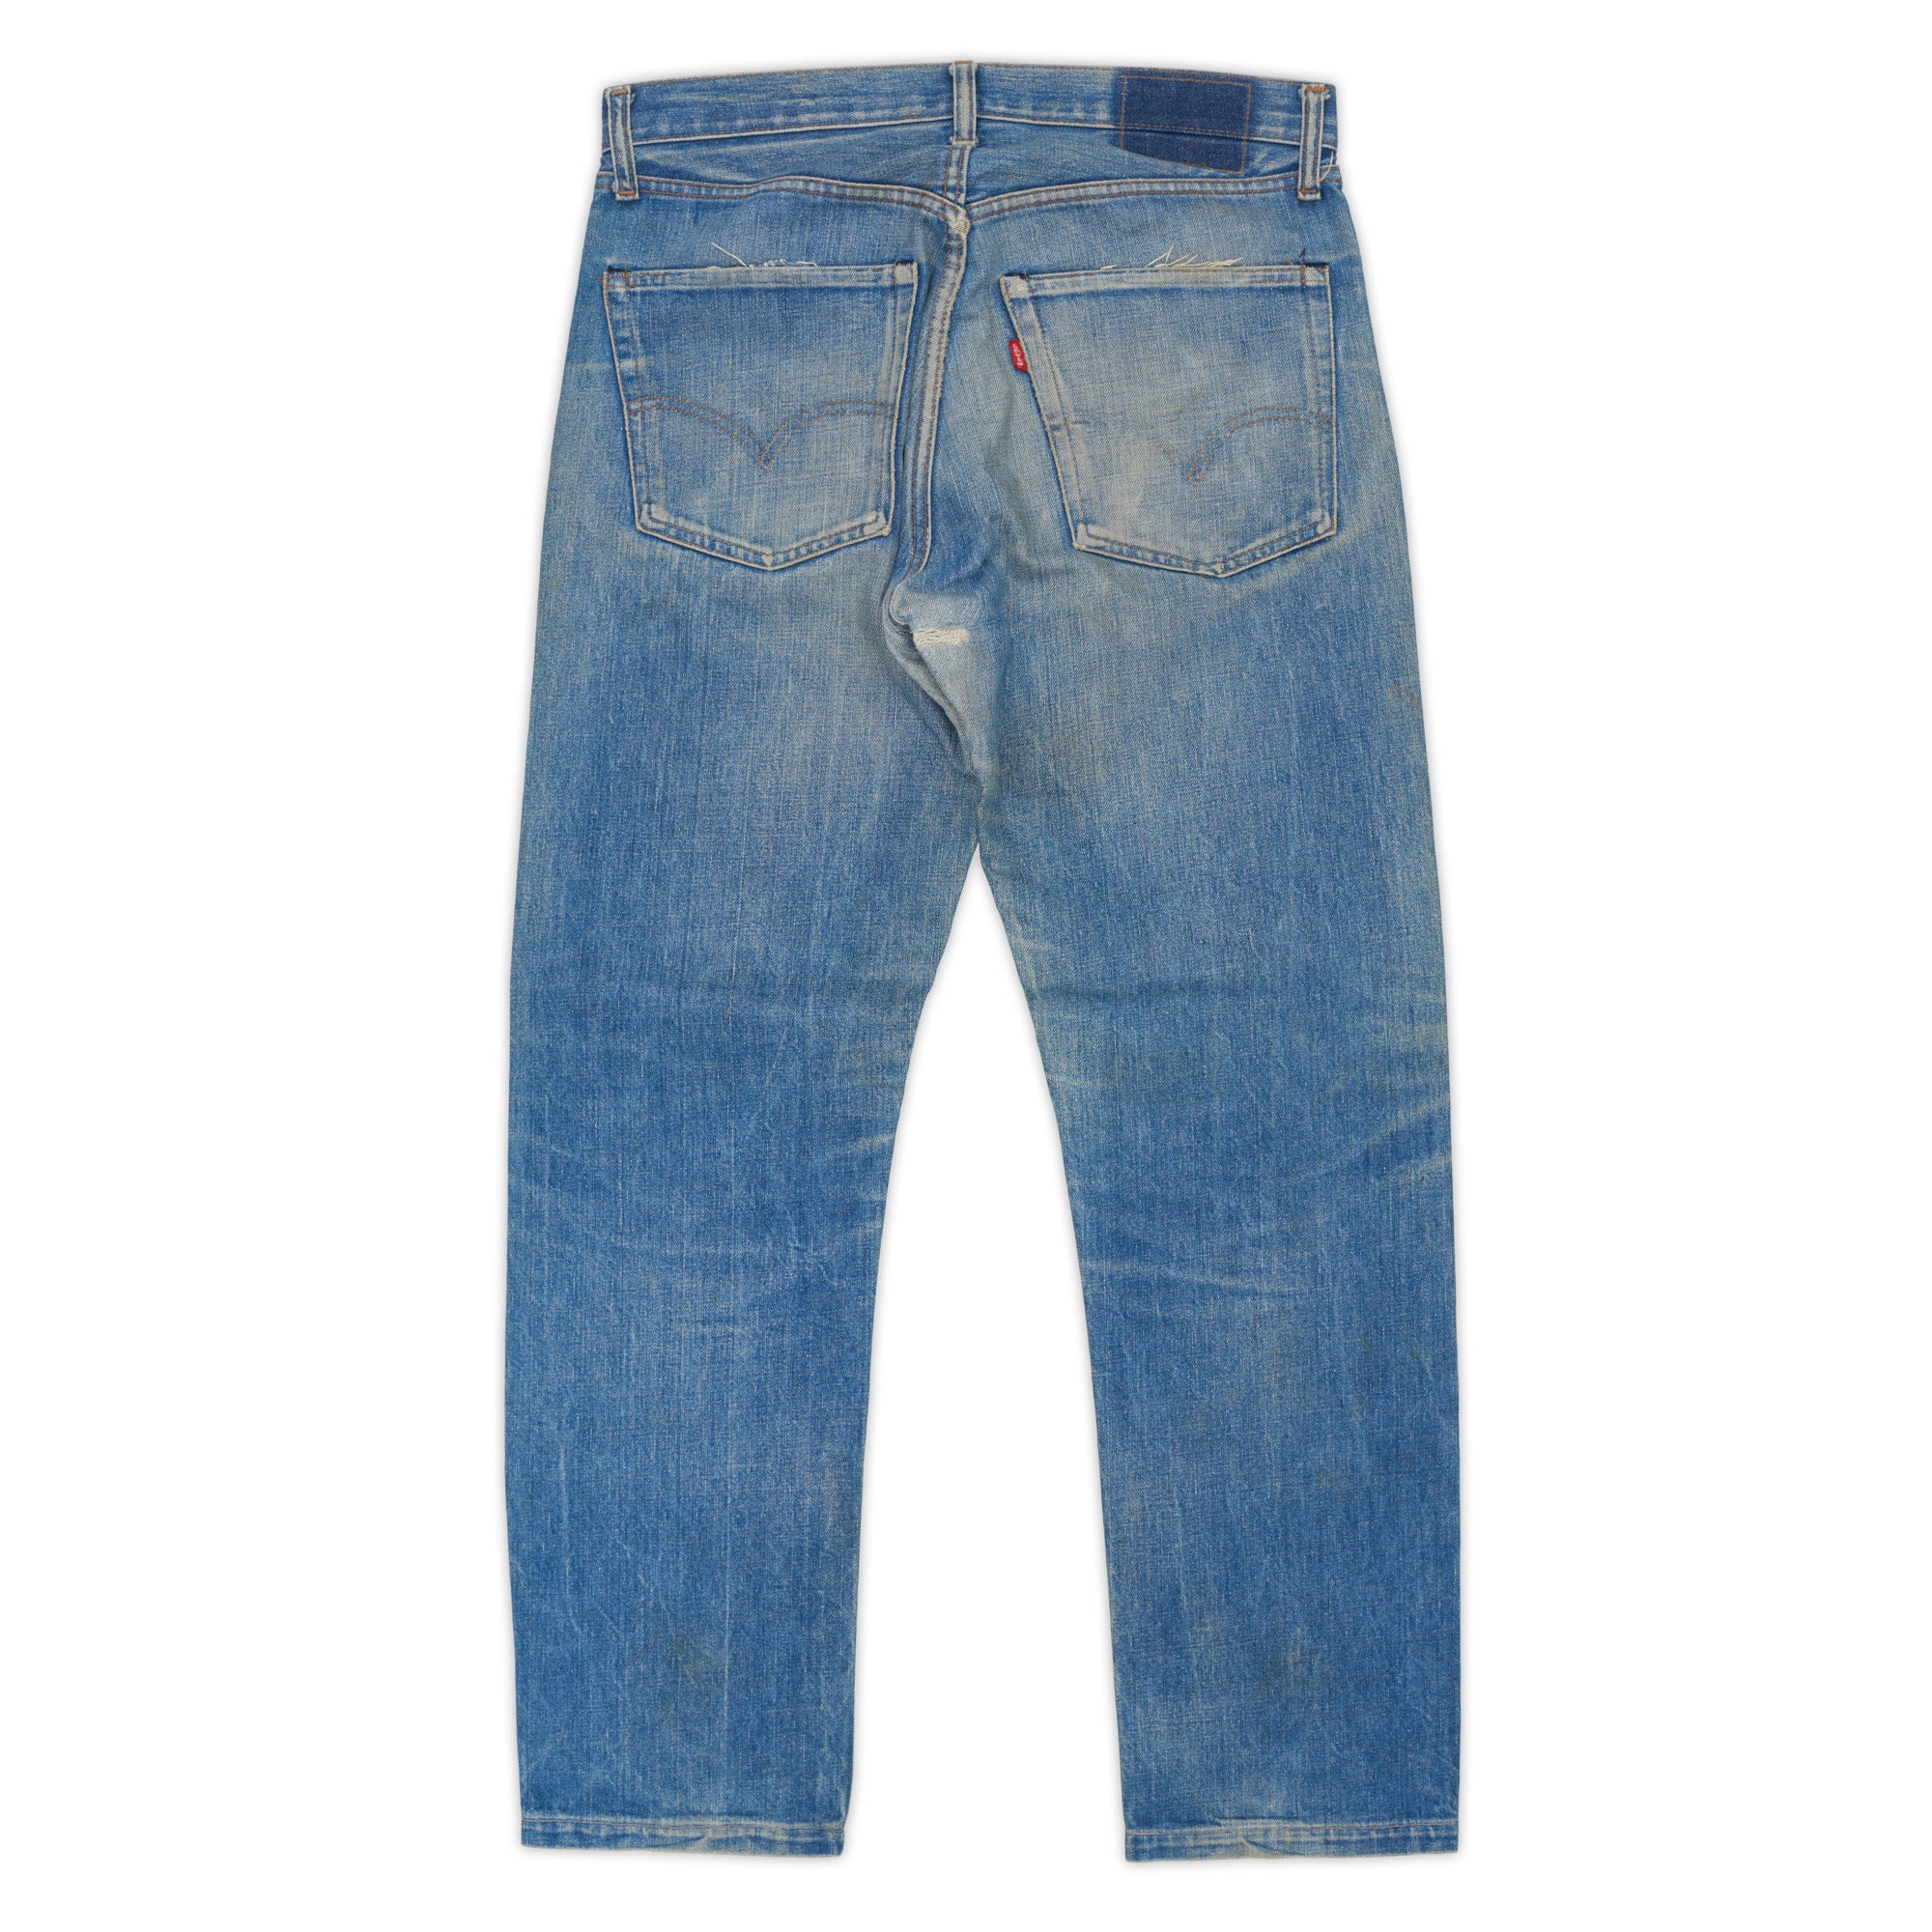 Vintage LEVI'S 501 USA Selvedge Slim Jeans Pants W33 L34 #524 Blue Tac